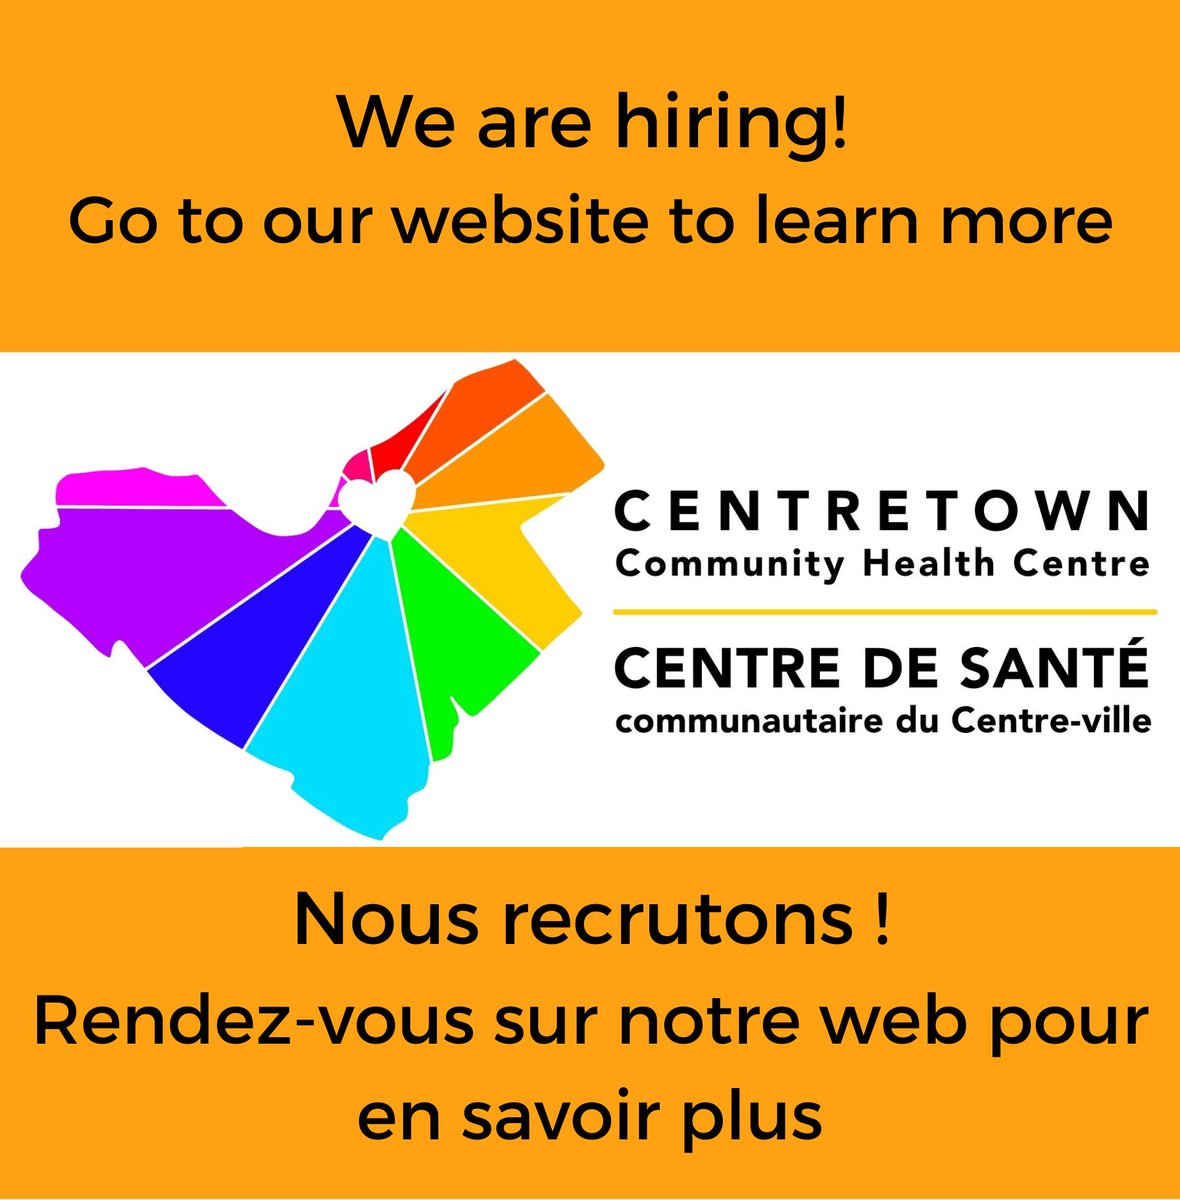 We are hiring! Go to our website to learn more - Nous recrutons ! Rendez-vous sur notre web pour en savoir plus. centretownchc.org/careers